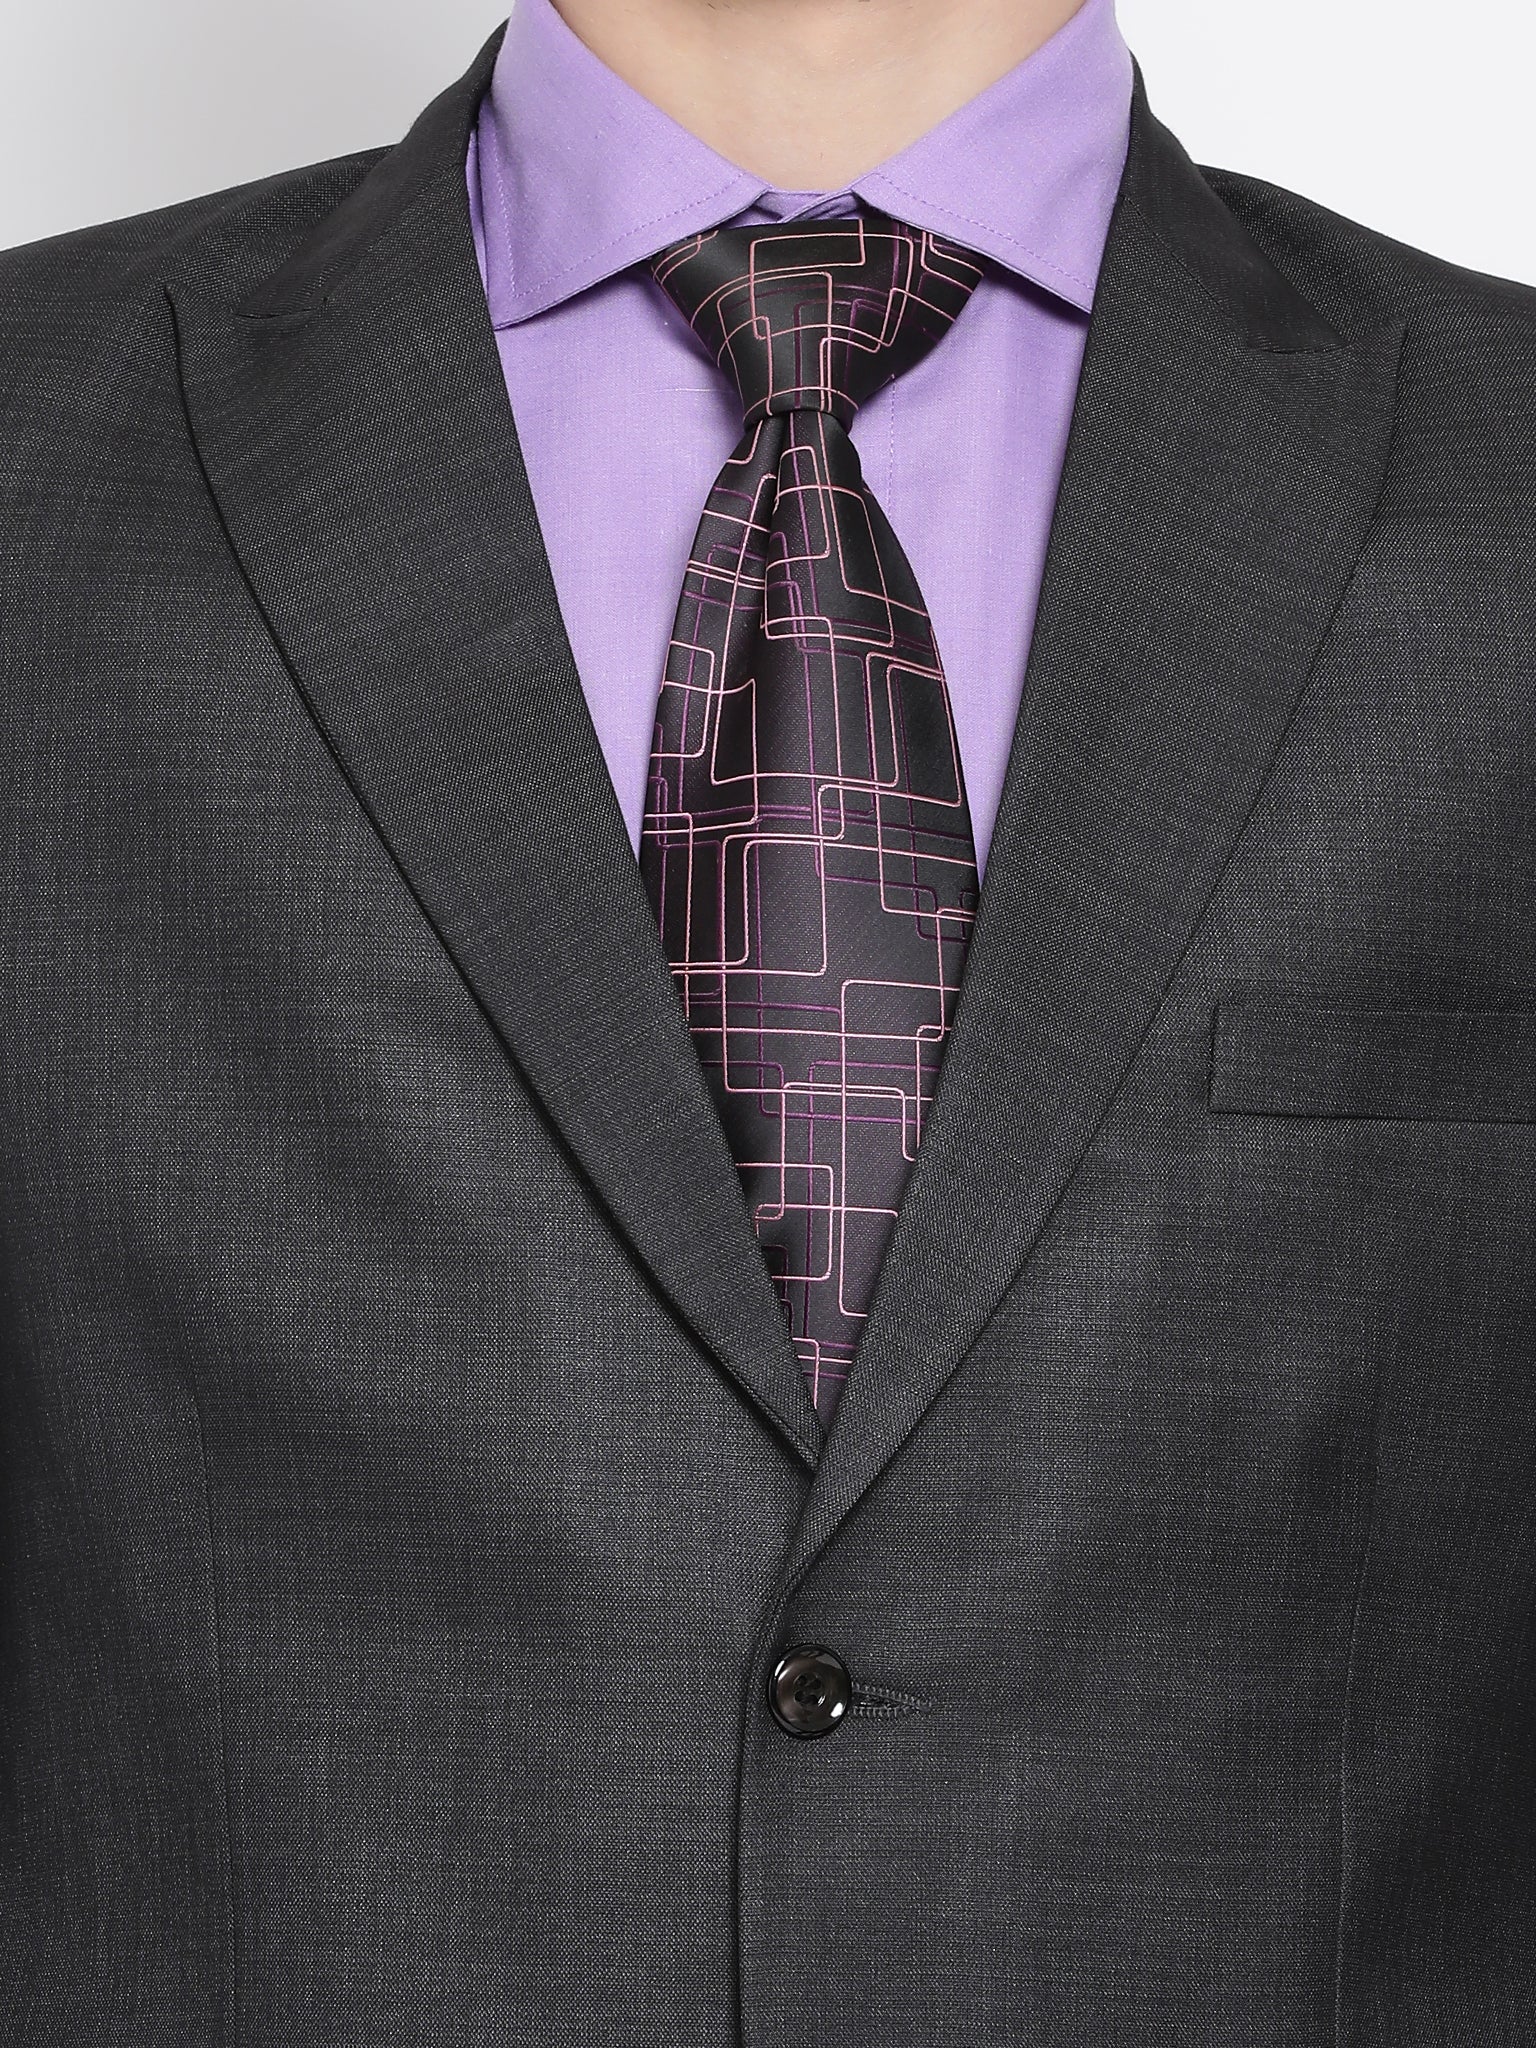 Slim Fit Pinstripe Mens Suit Silver Grey Purple Line 2 Button Notch Lapel  AZAR | eBay